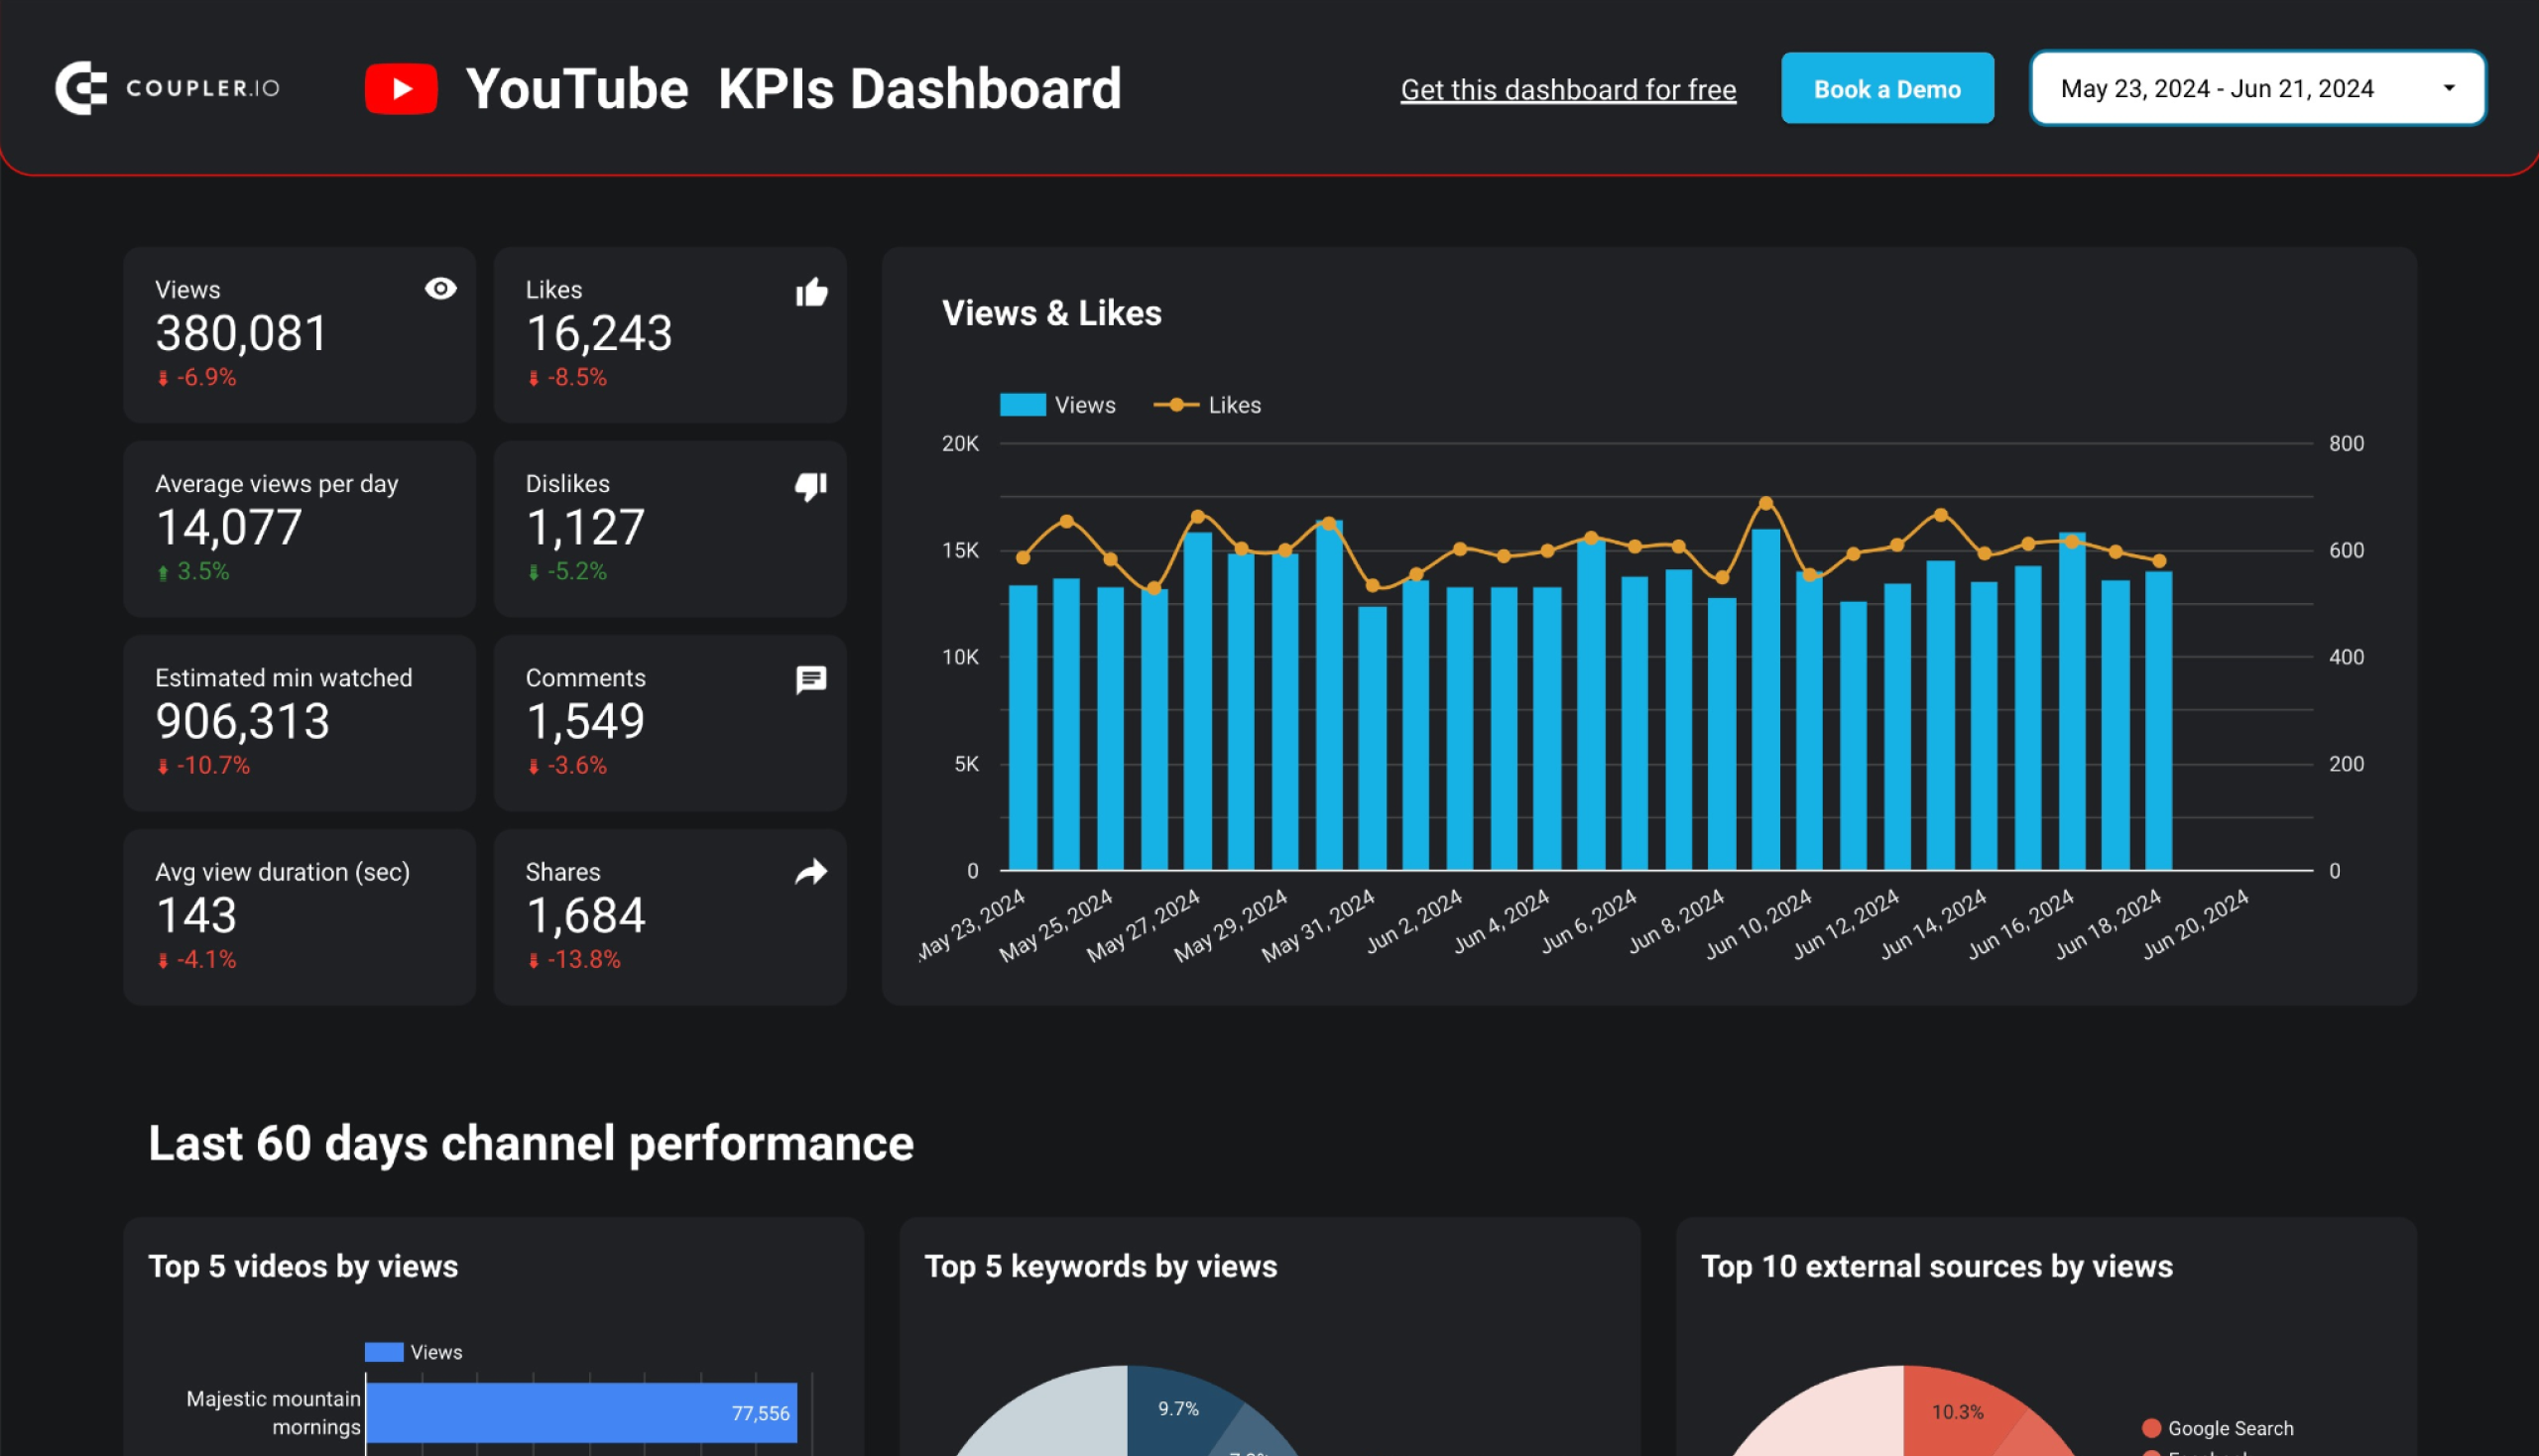 YouTube KPIs Dashboard image